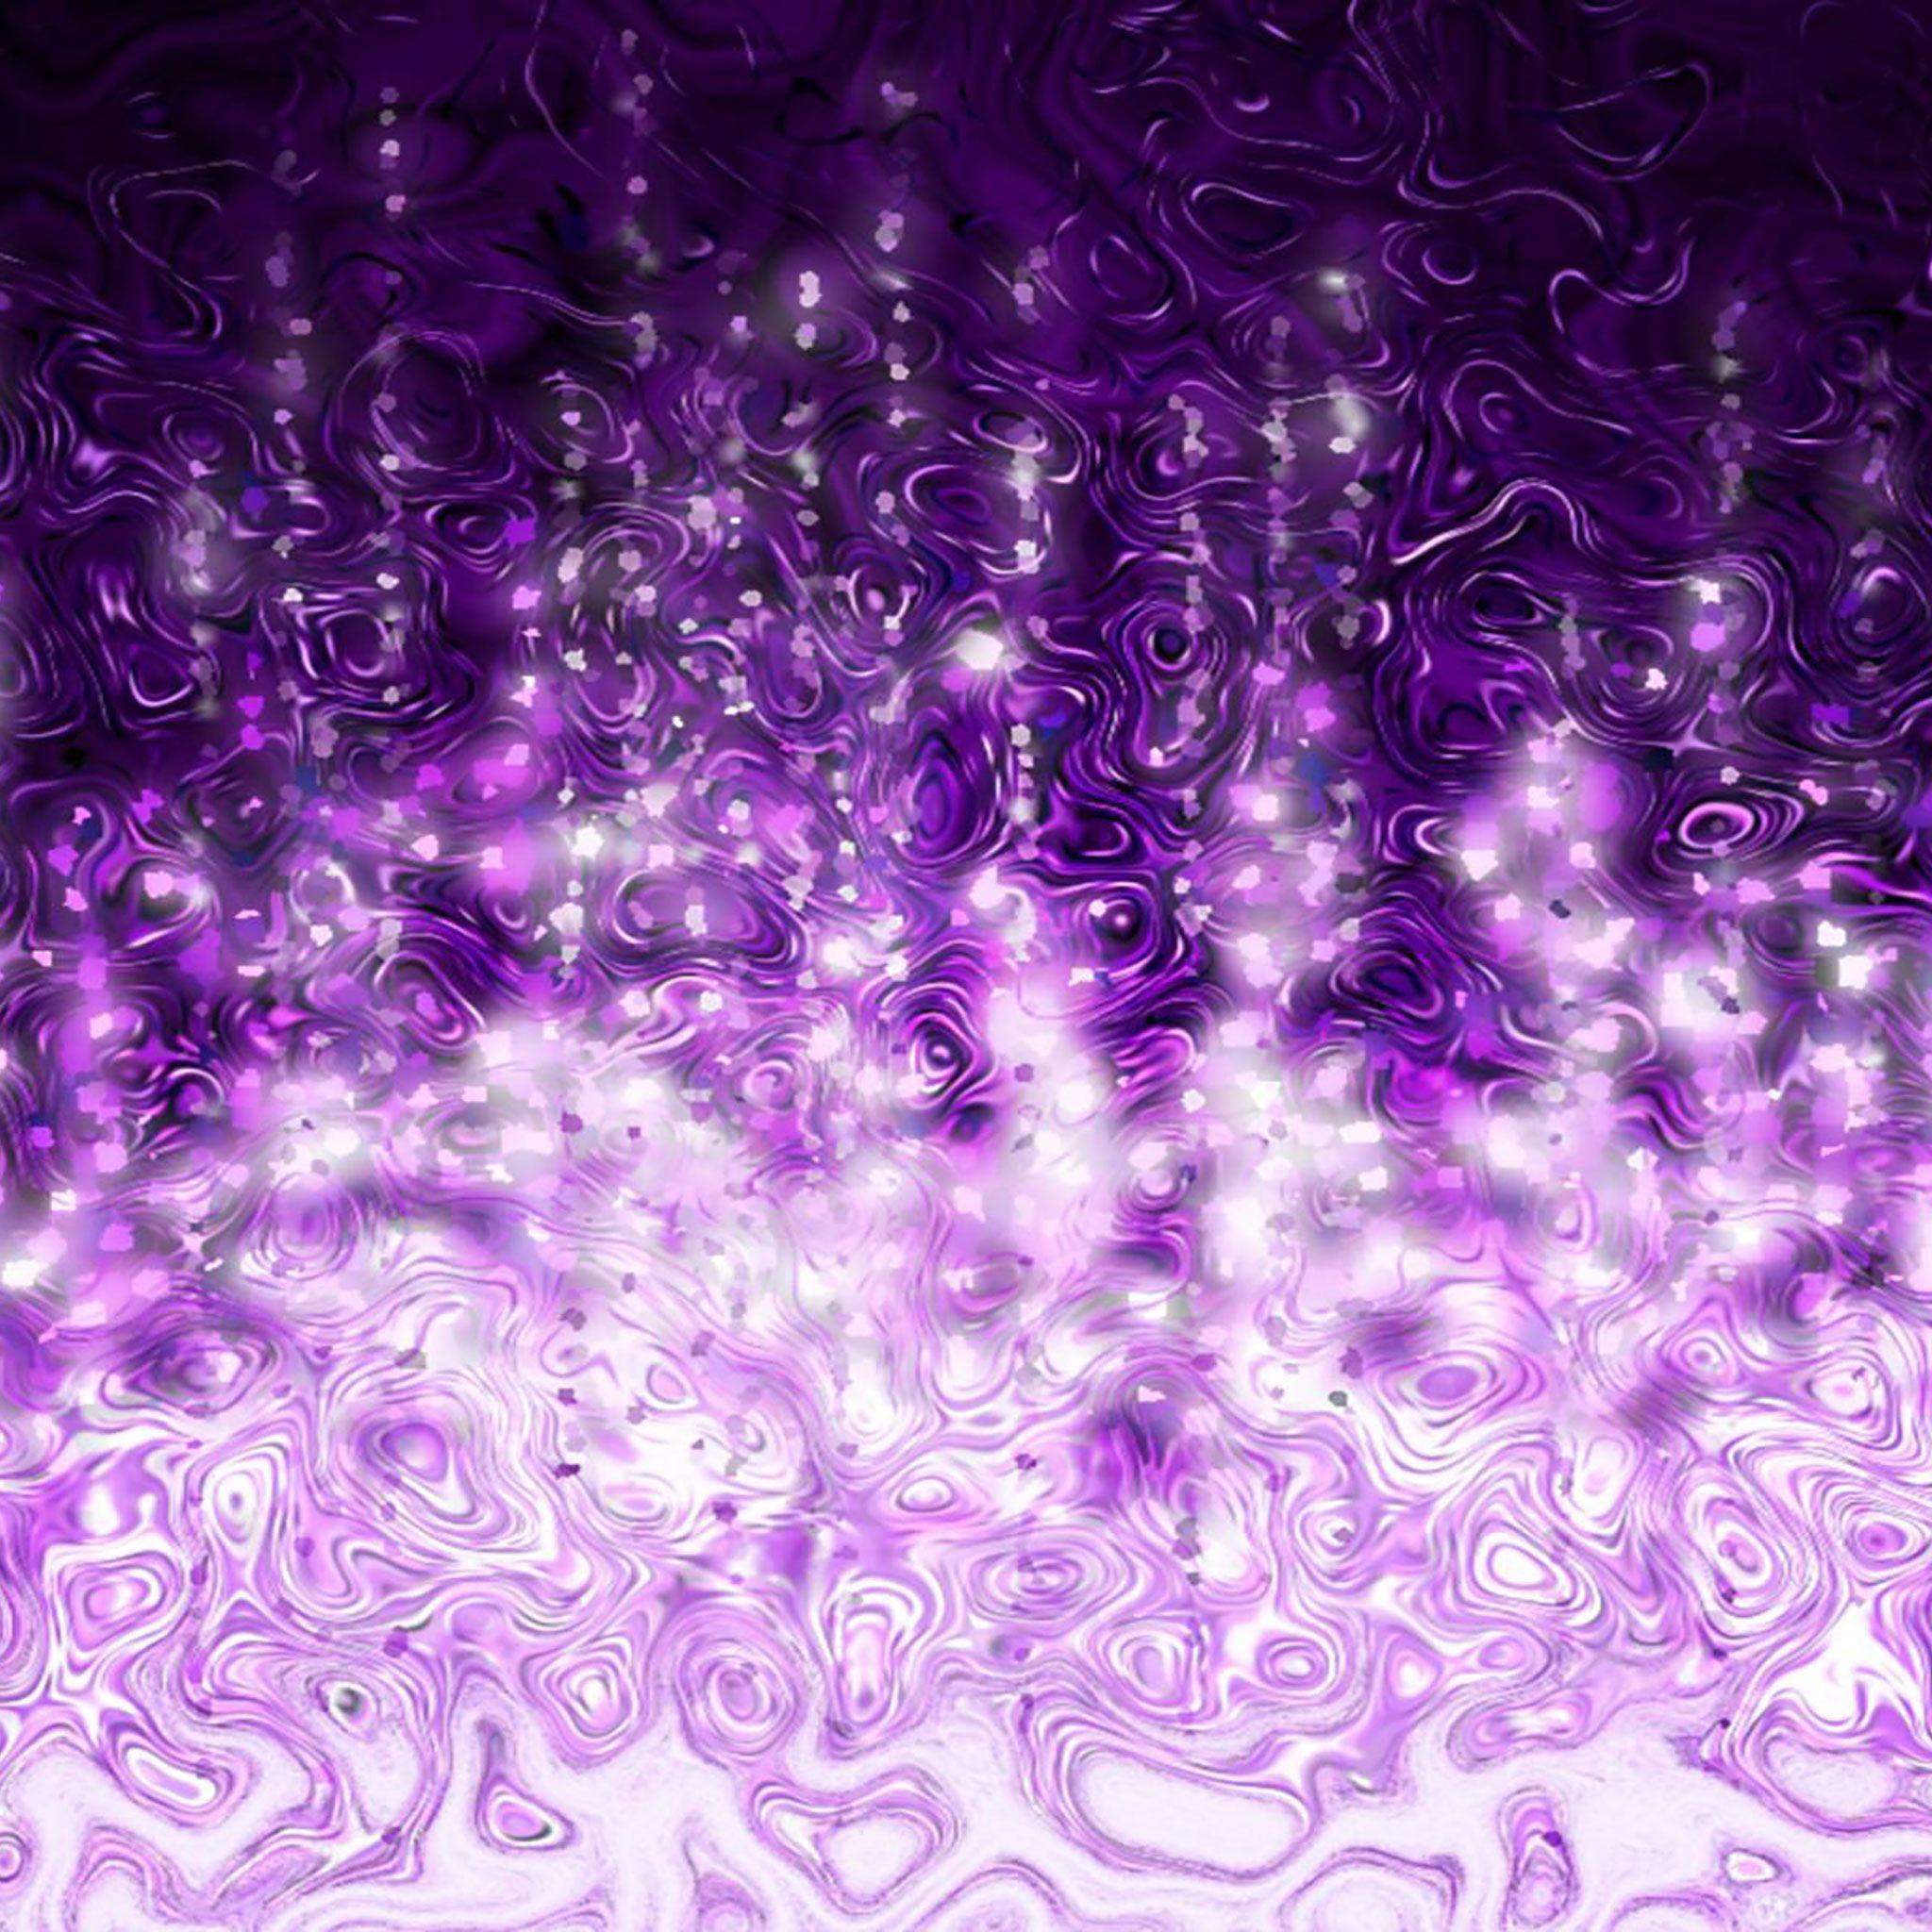 Download wallpaper 3415x3415 drops surface purple ipad pro 129 retina  for parallax hd background